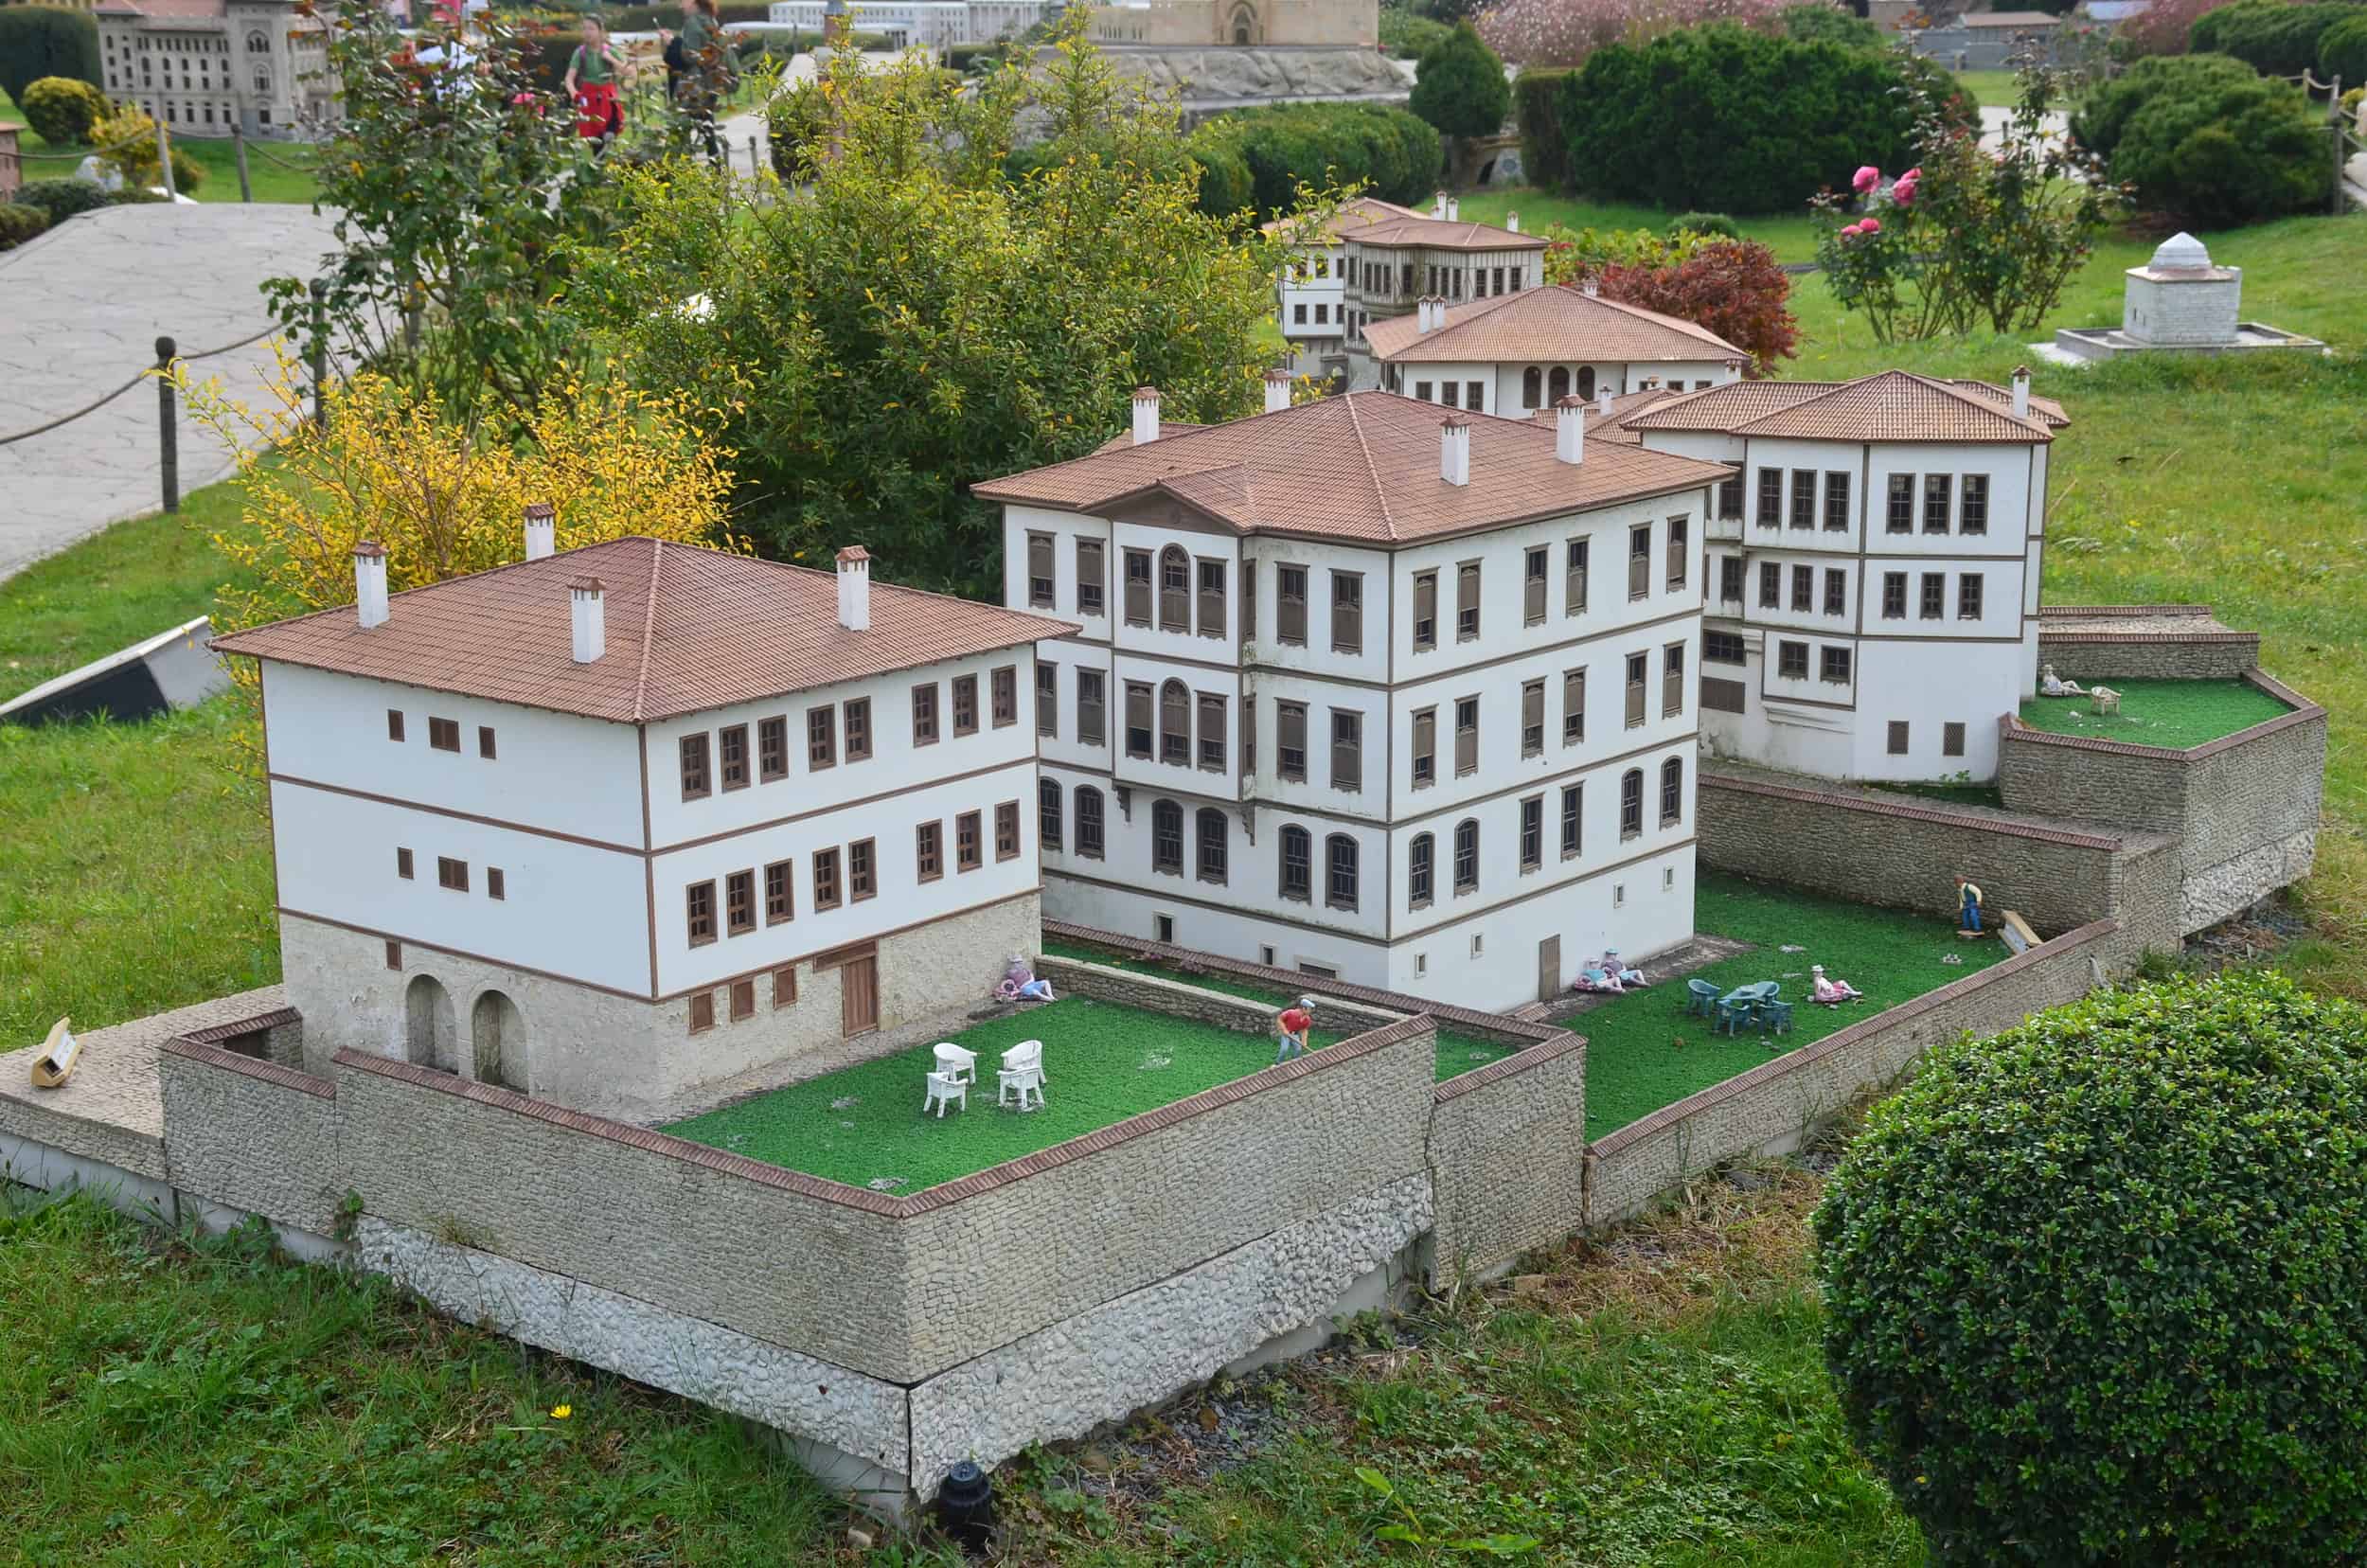 Model of Safranbolu homes, 17th-19th centuries at Miniatürk in Istanbul, Turkey